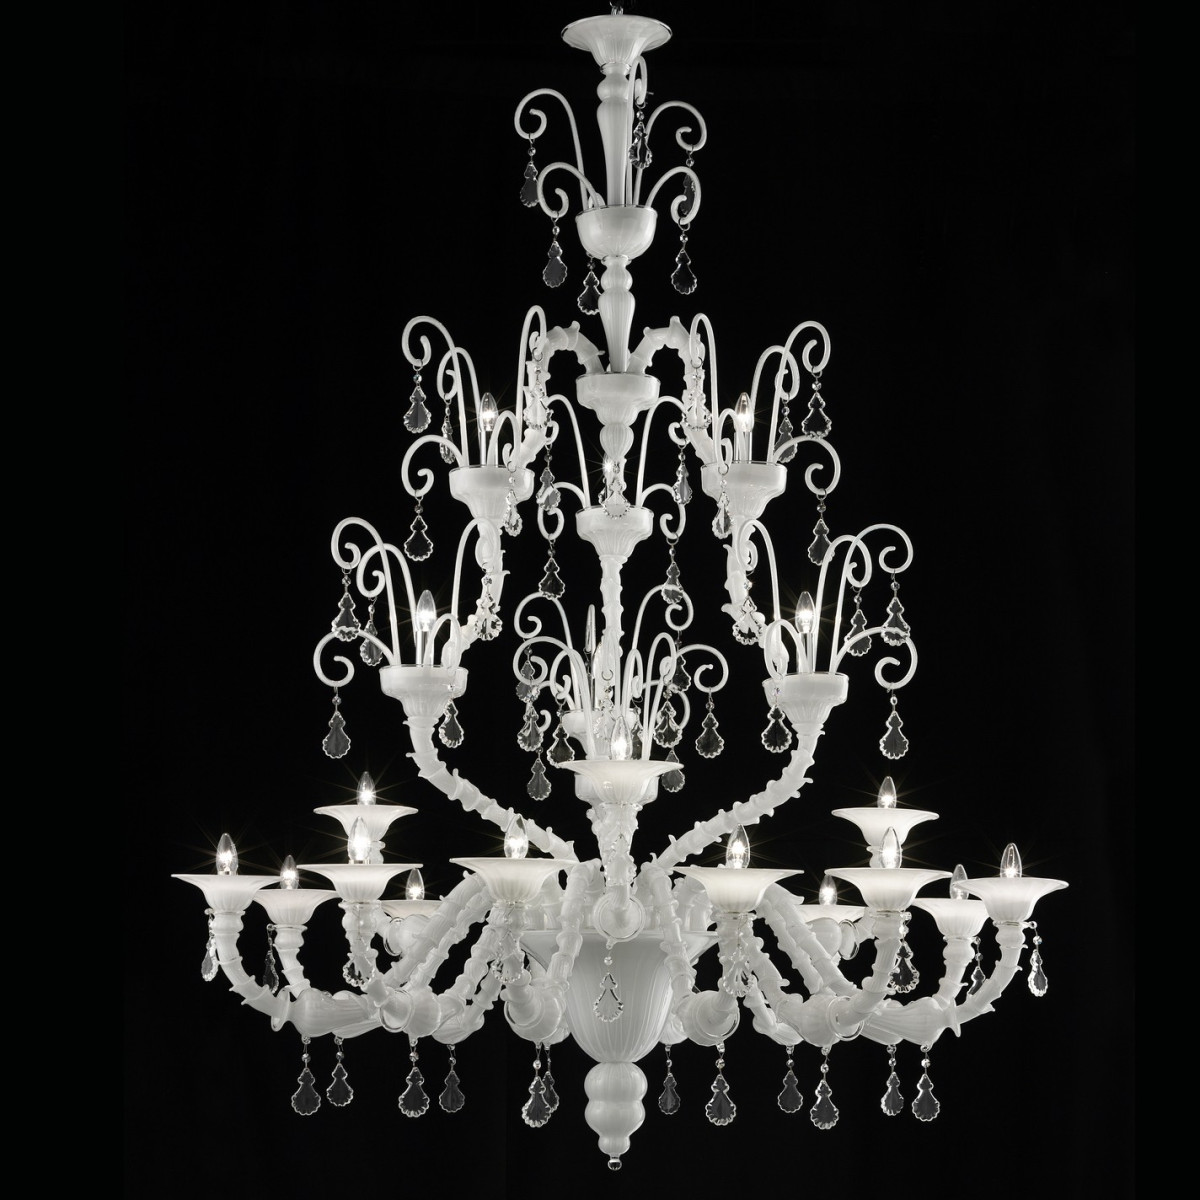 Inverno white Murano glass chandelier - 12+3 lights - white transparent